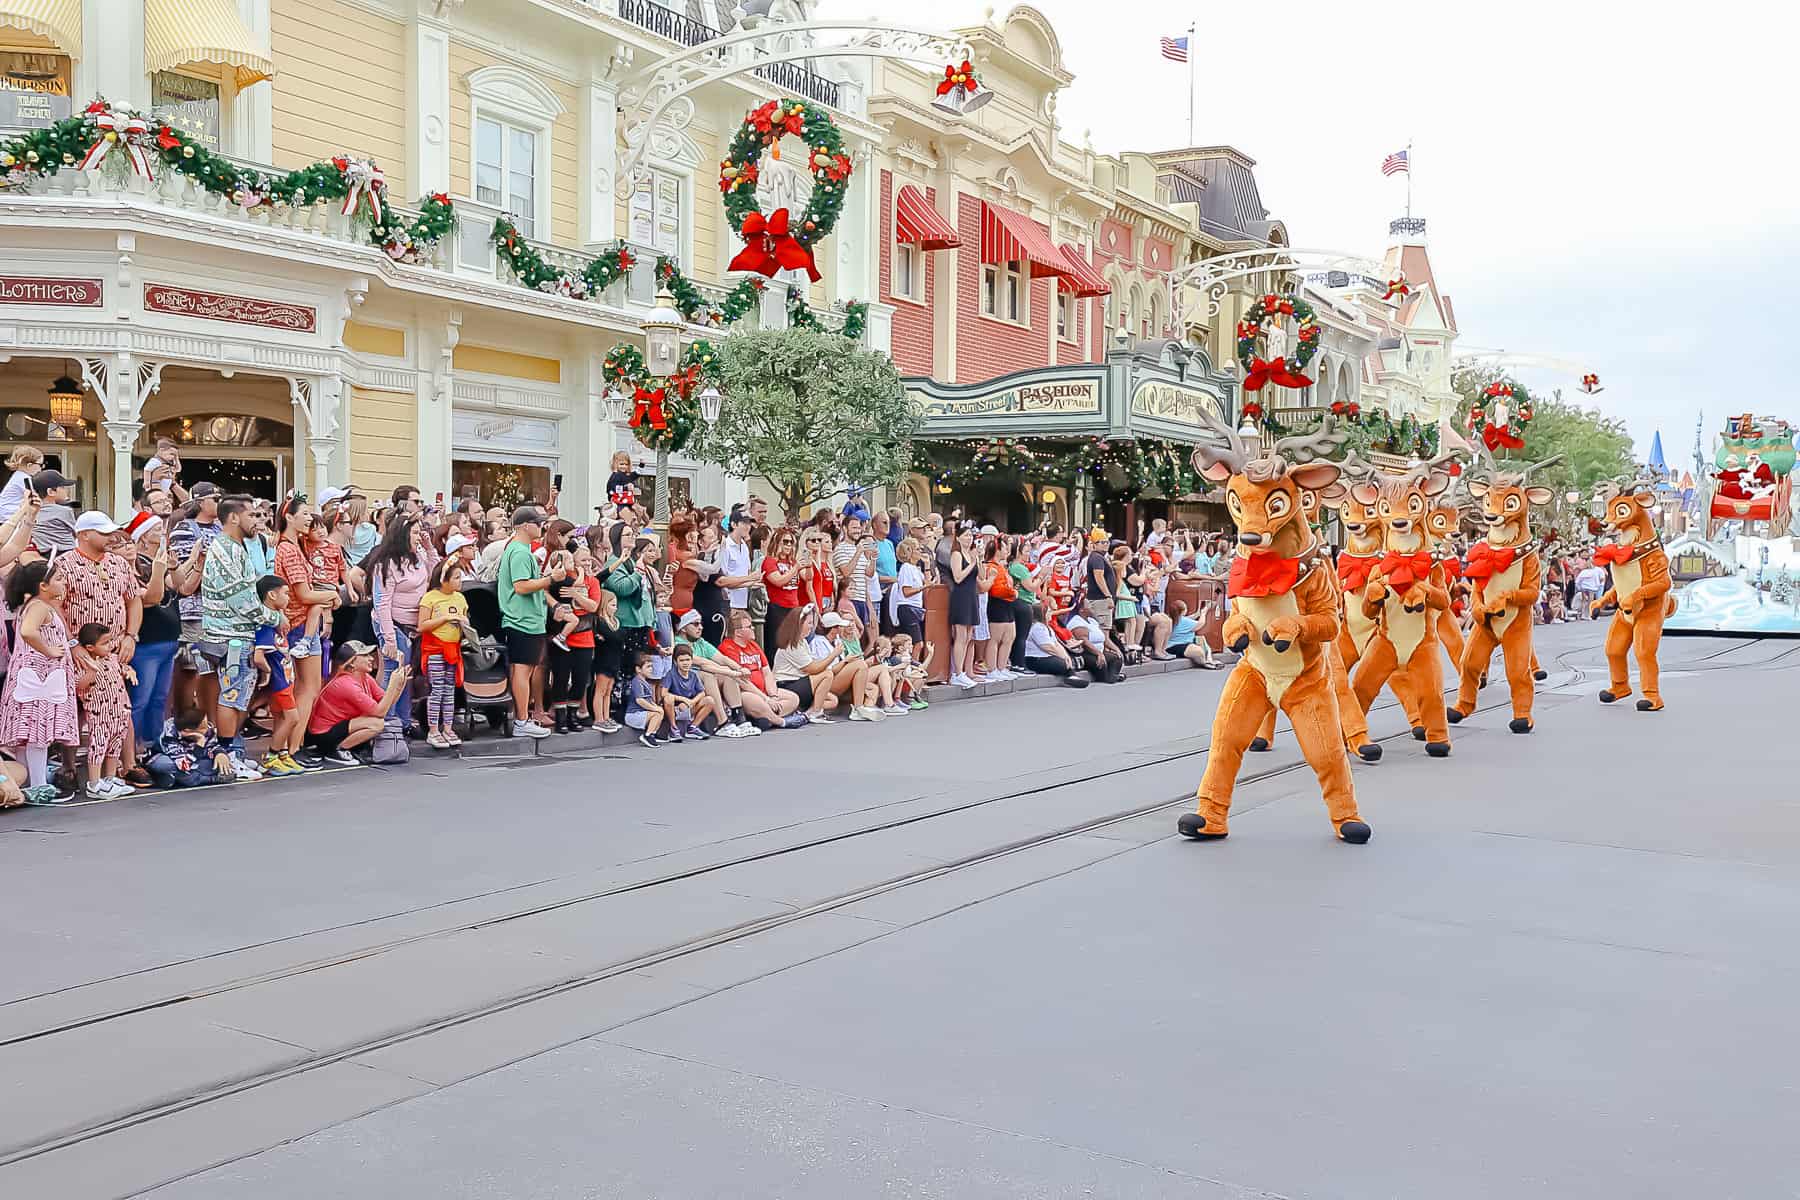 Santa's reindeer prance down Main Street, USA. 